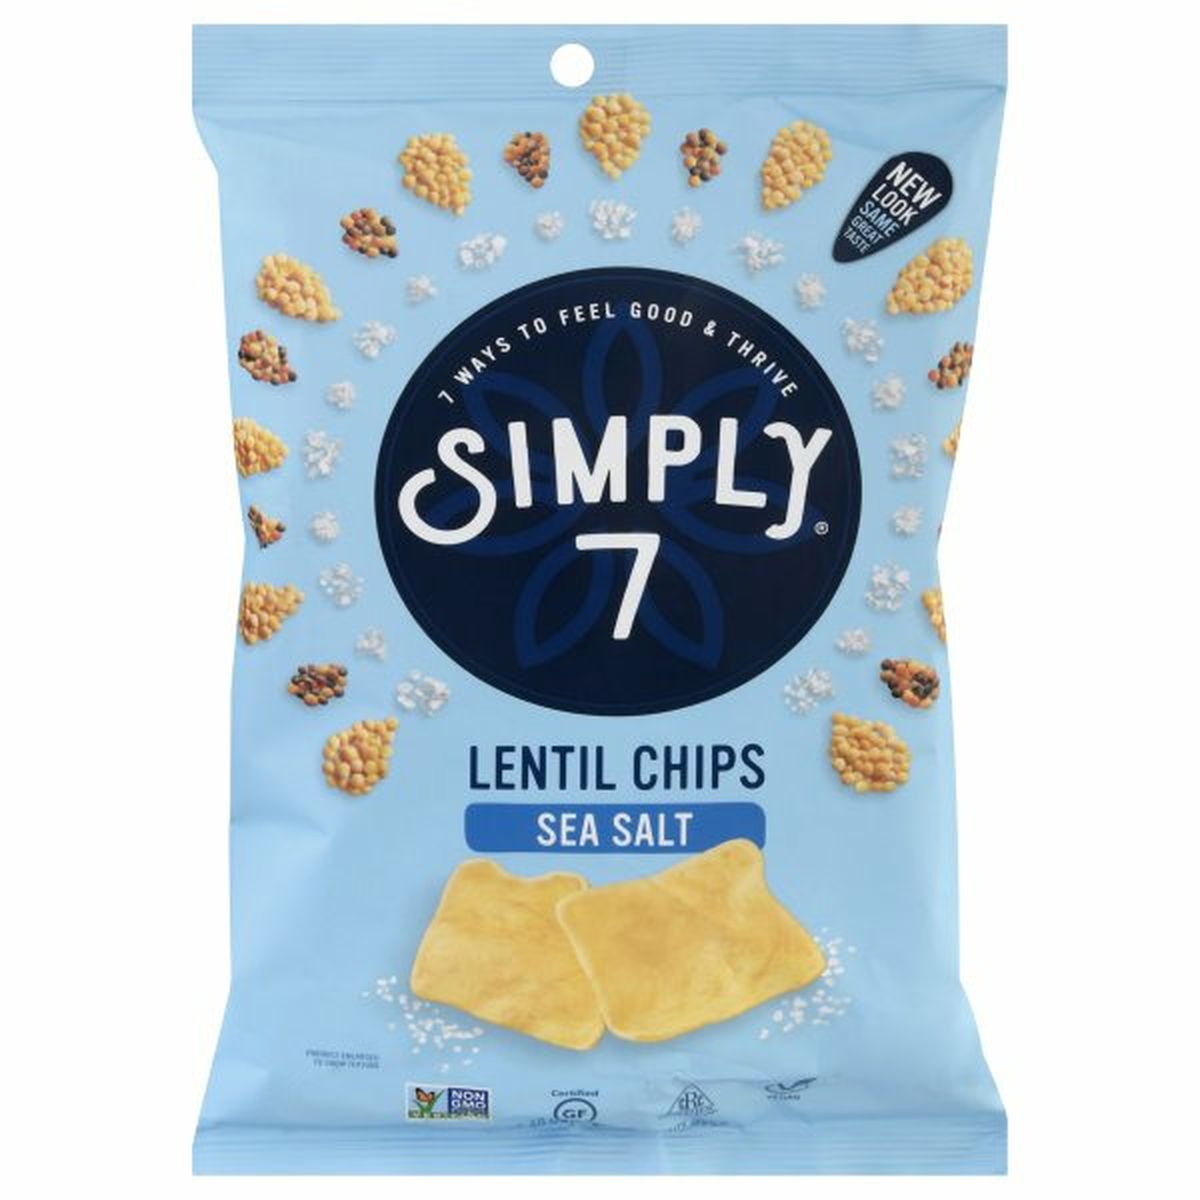 Calories in Simply7 Lentil Chips, Sea Salt